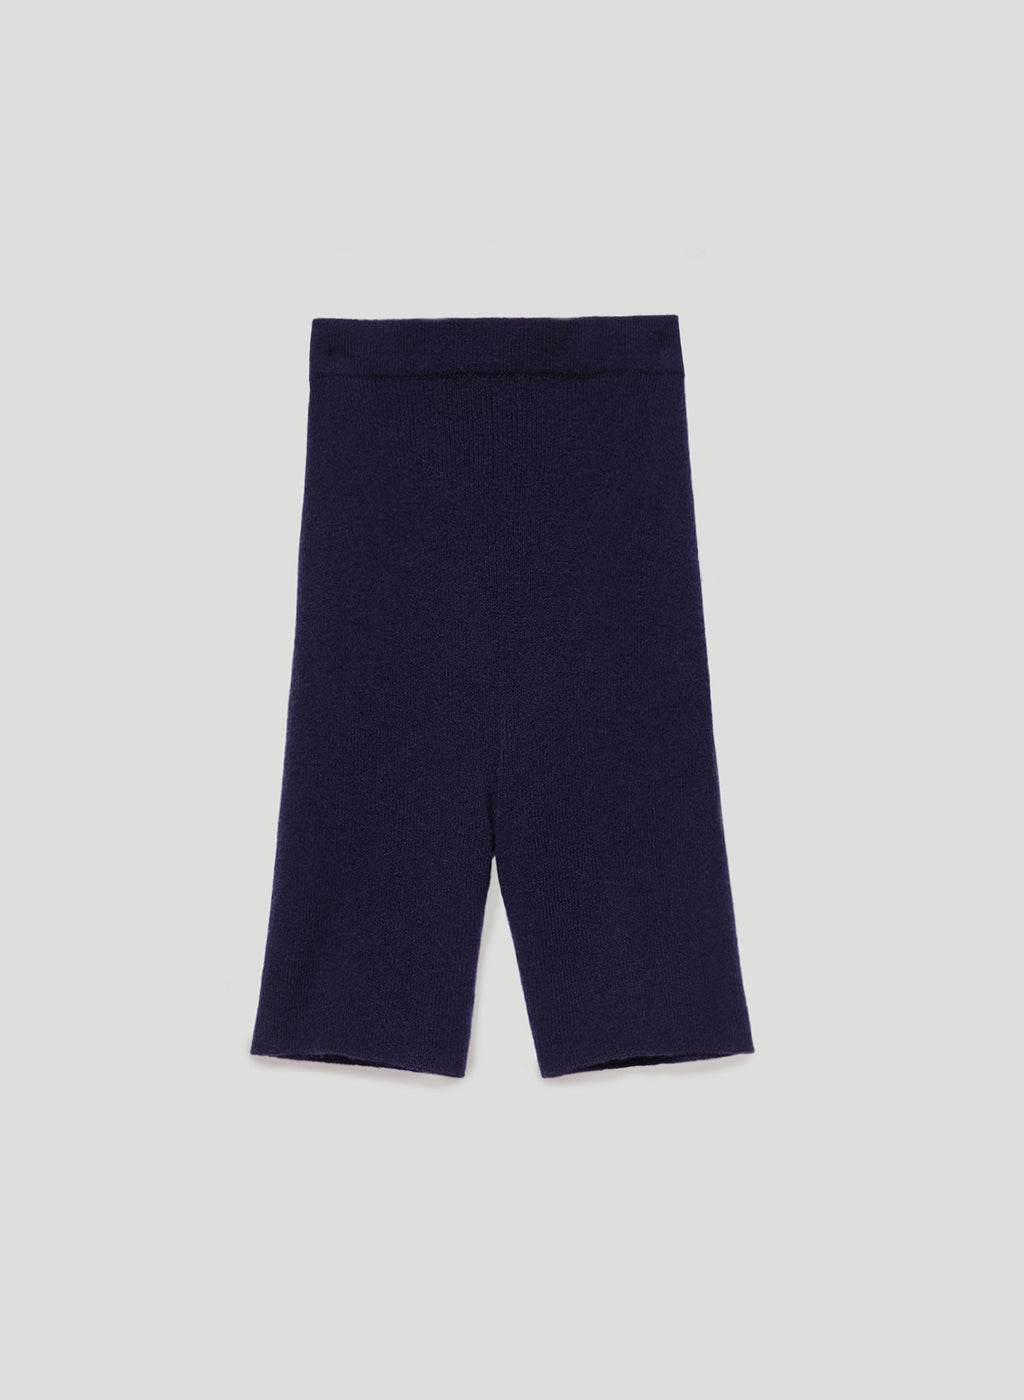 Blue knitted legging shorts with cashmere addition KATSURINA + JUL